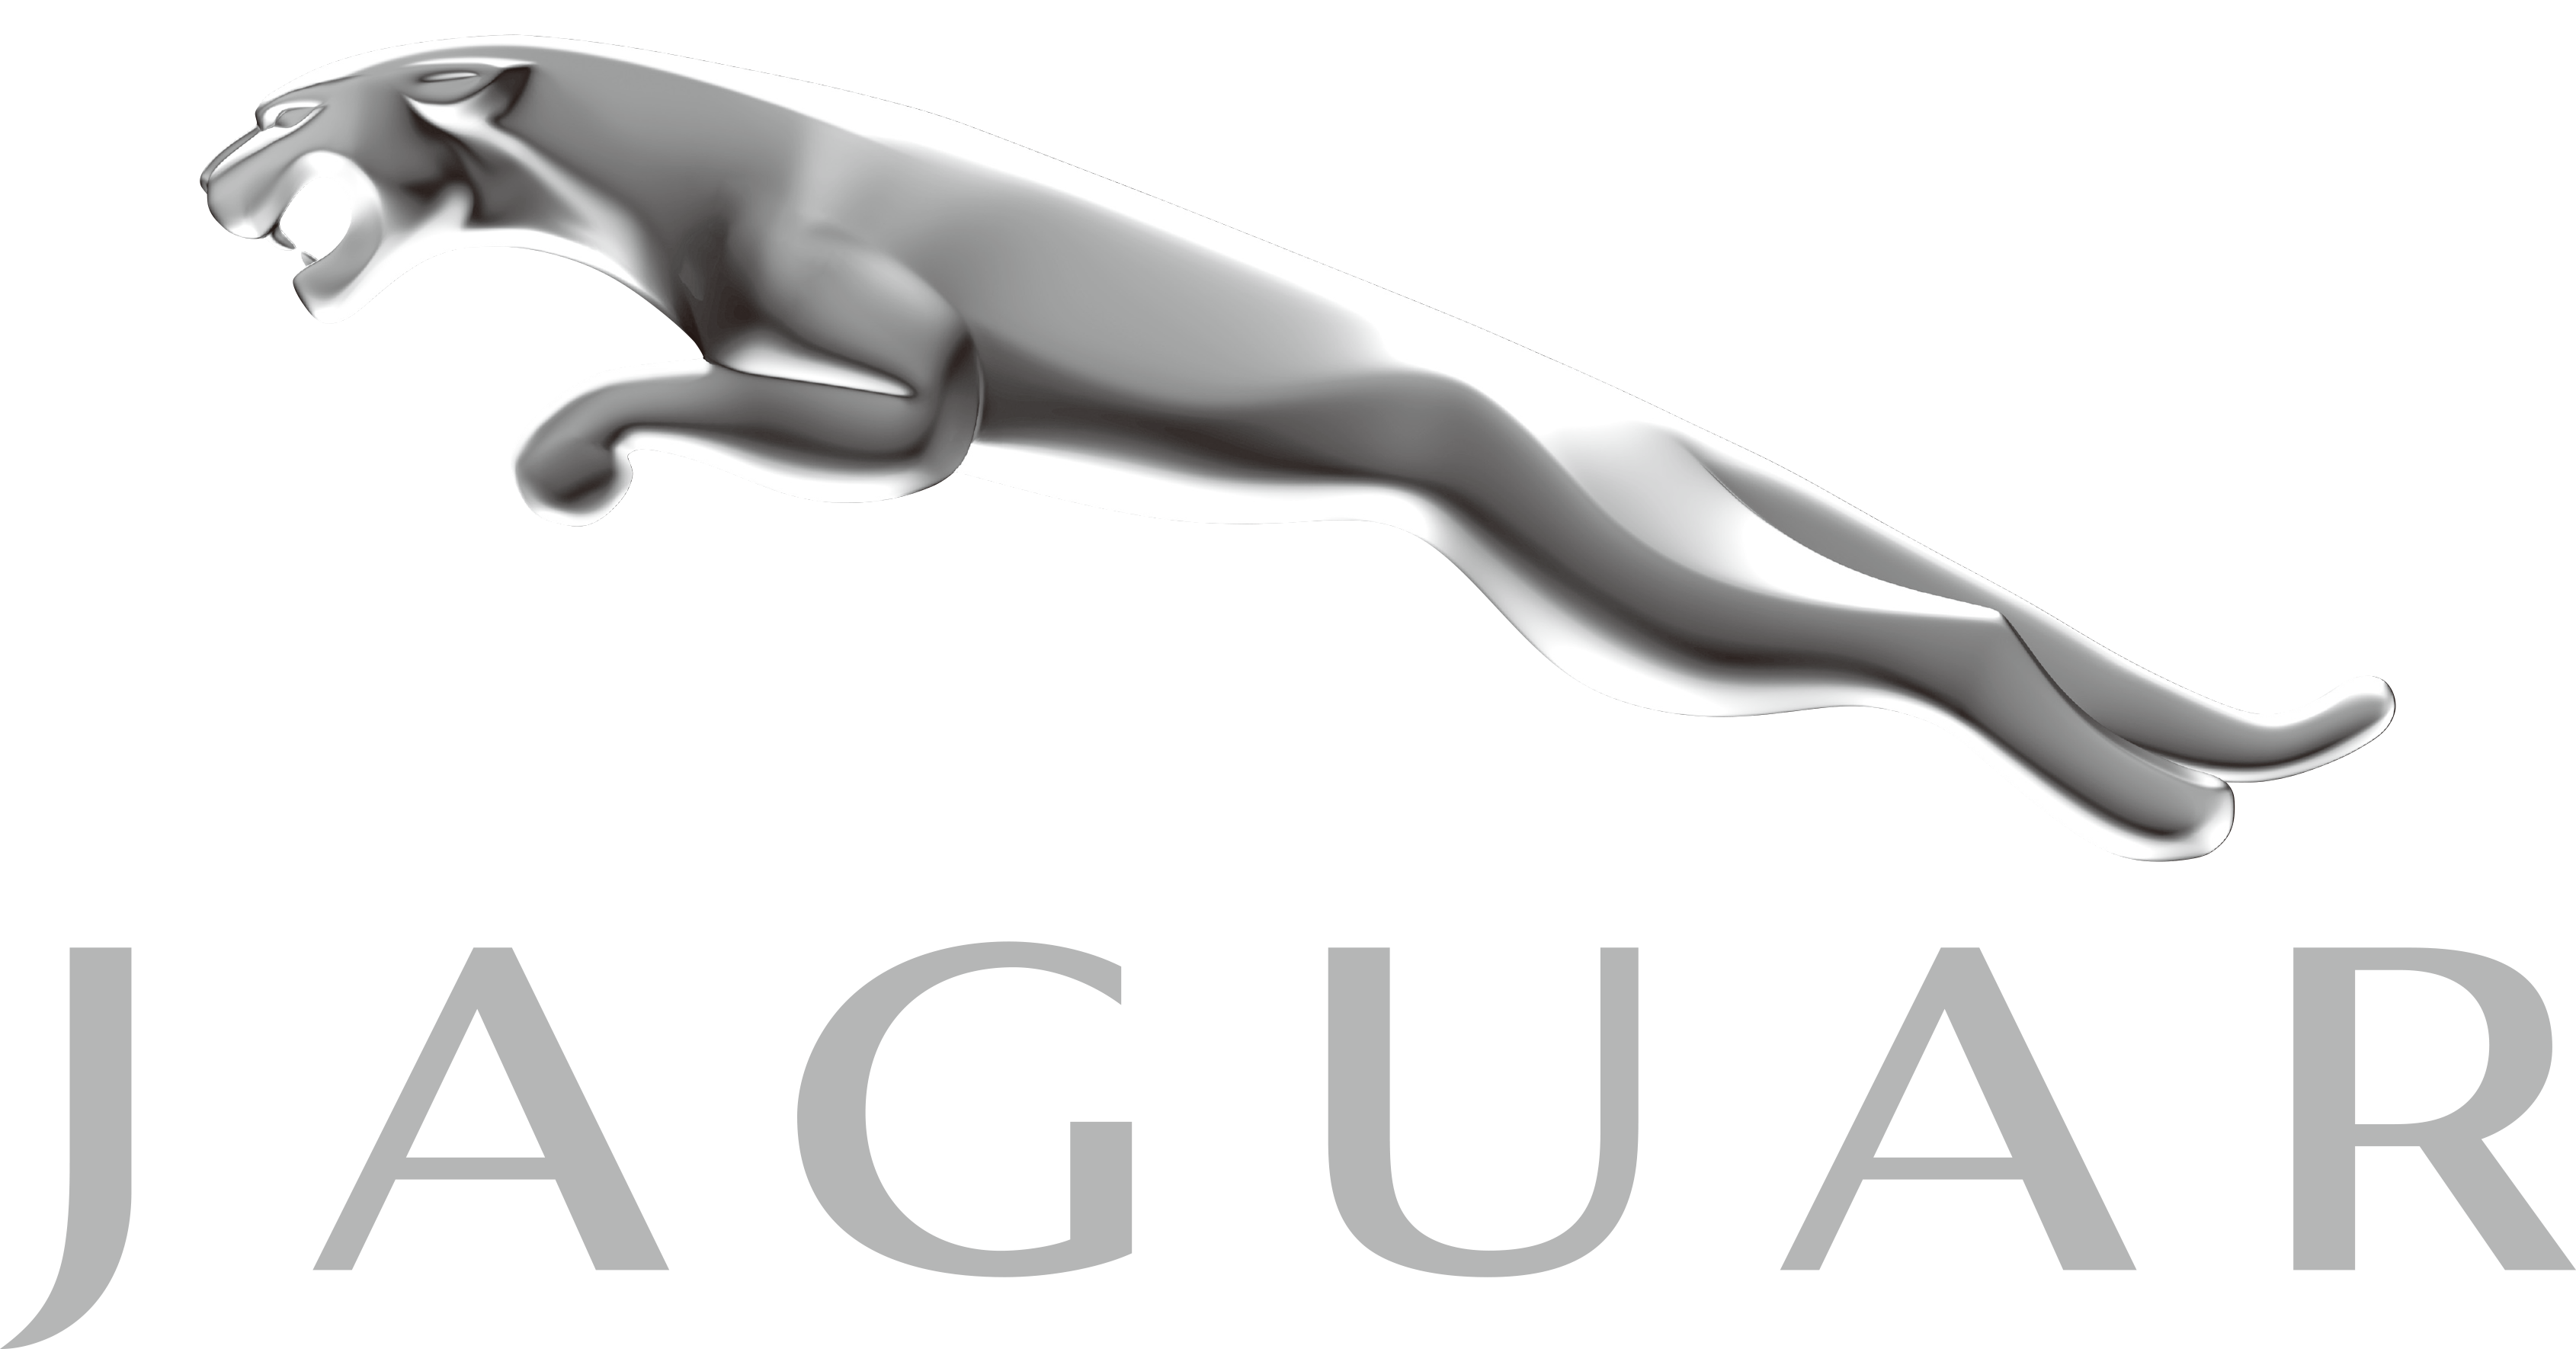 Jaguar Logo Transparent Background | VARDPRX.COM